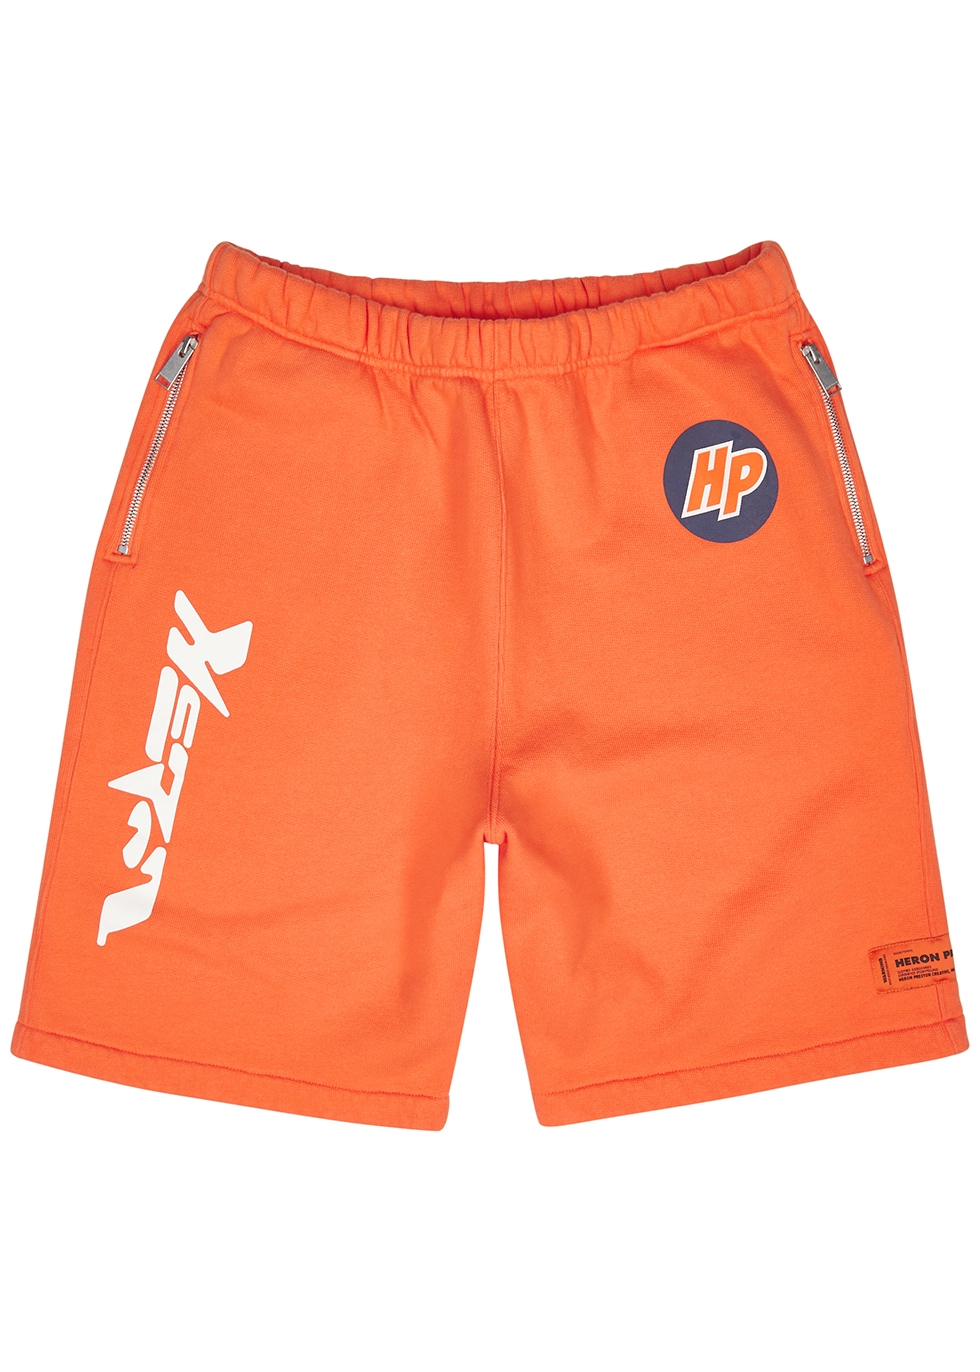 Techno orange printed cotton shorts